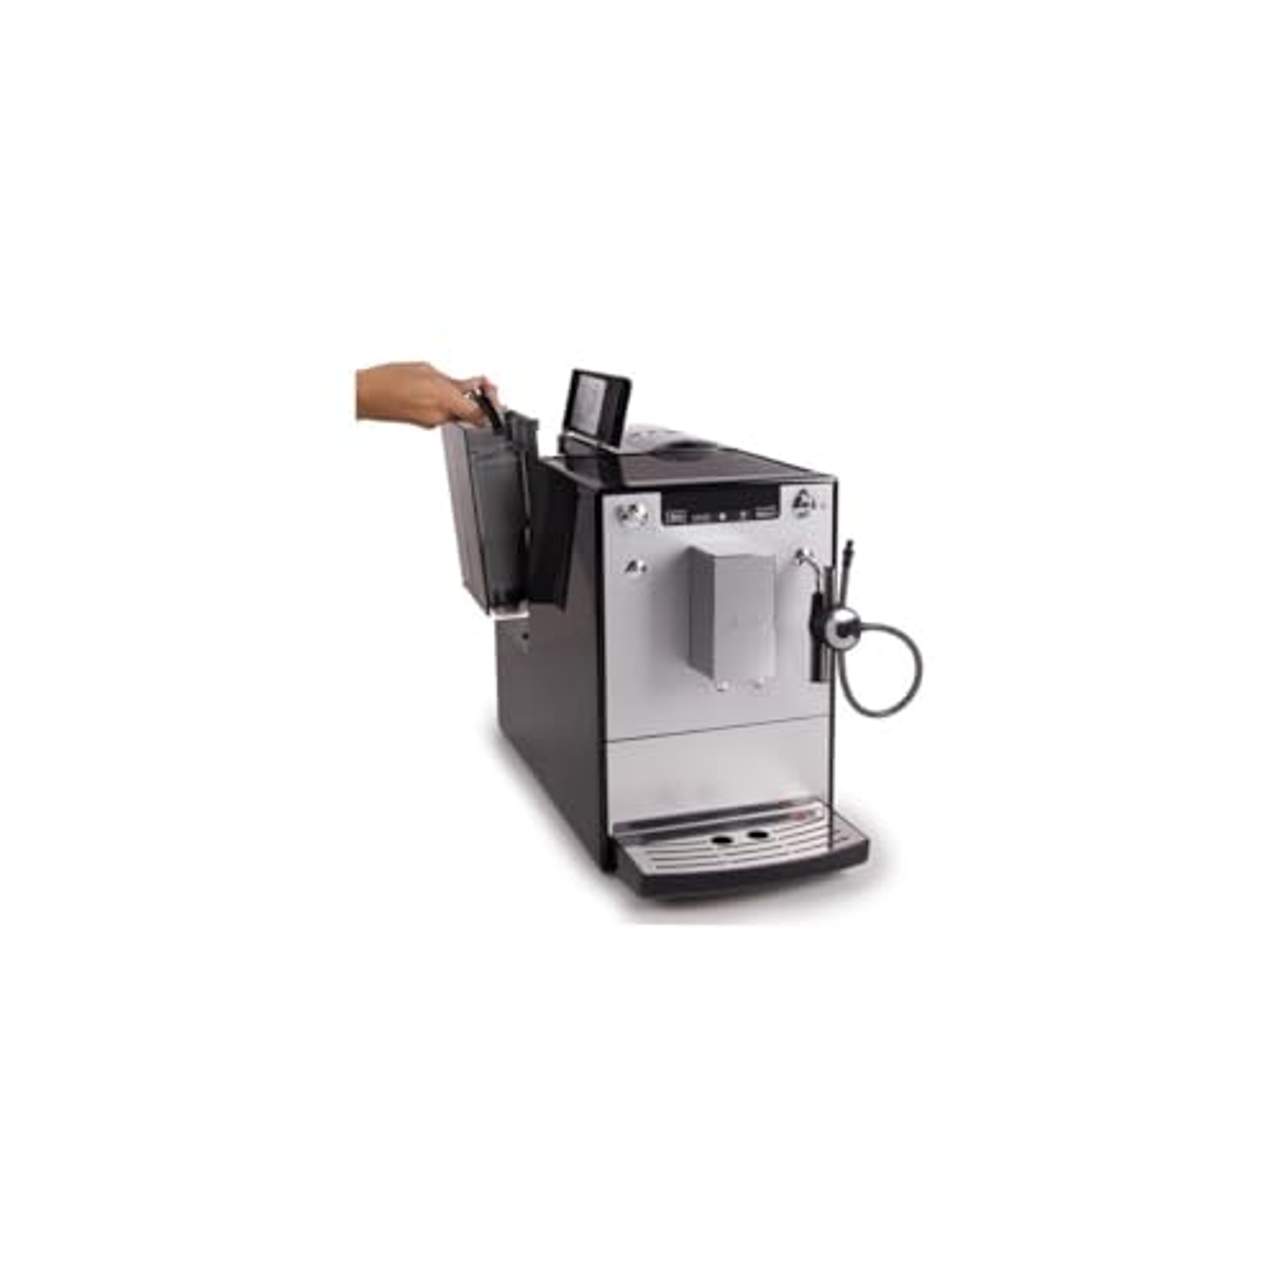 Melitta Caffeo Solo & Perfect Milk E957-103 Schlanker Kaffeevollautomat